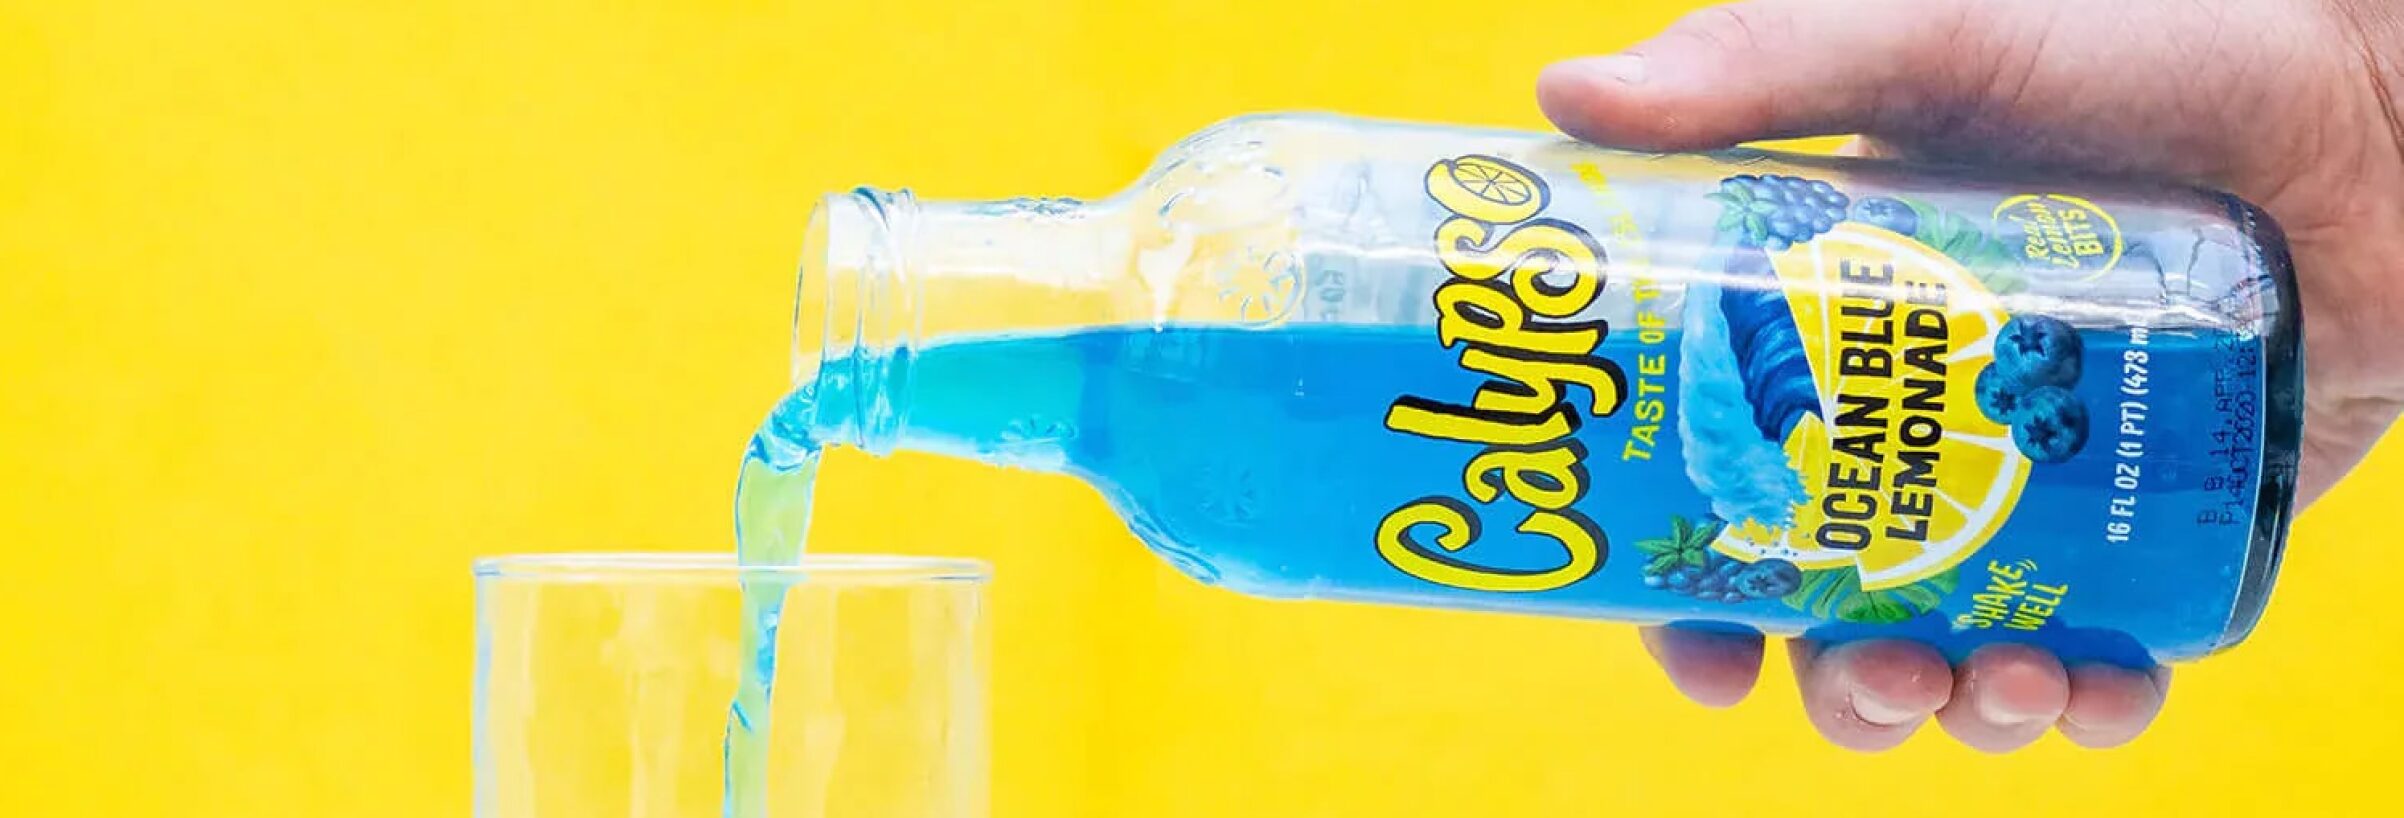 A hand pours lemonade into a glass.